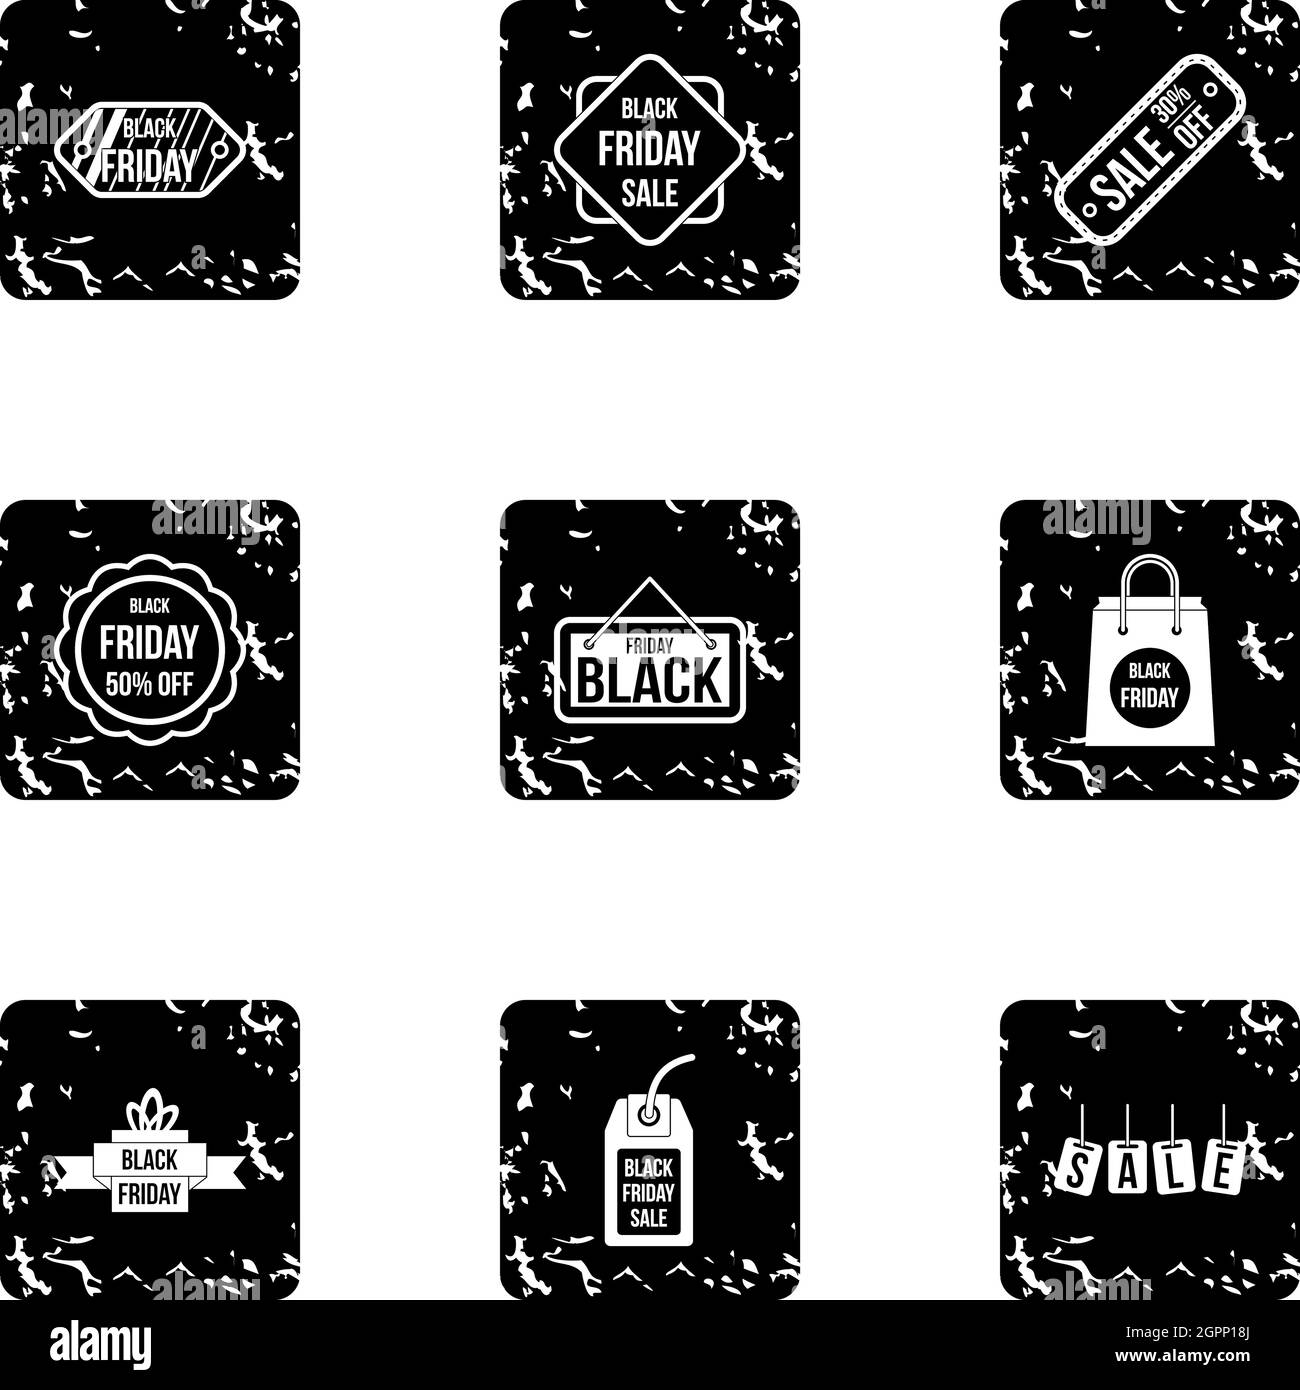 Black friday icons set, grunge style Stock Vector